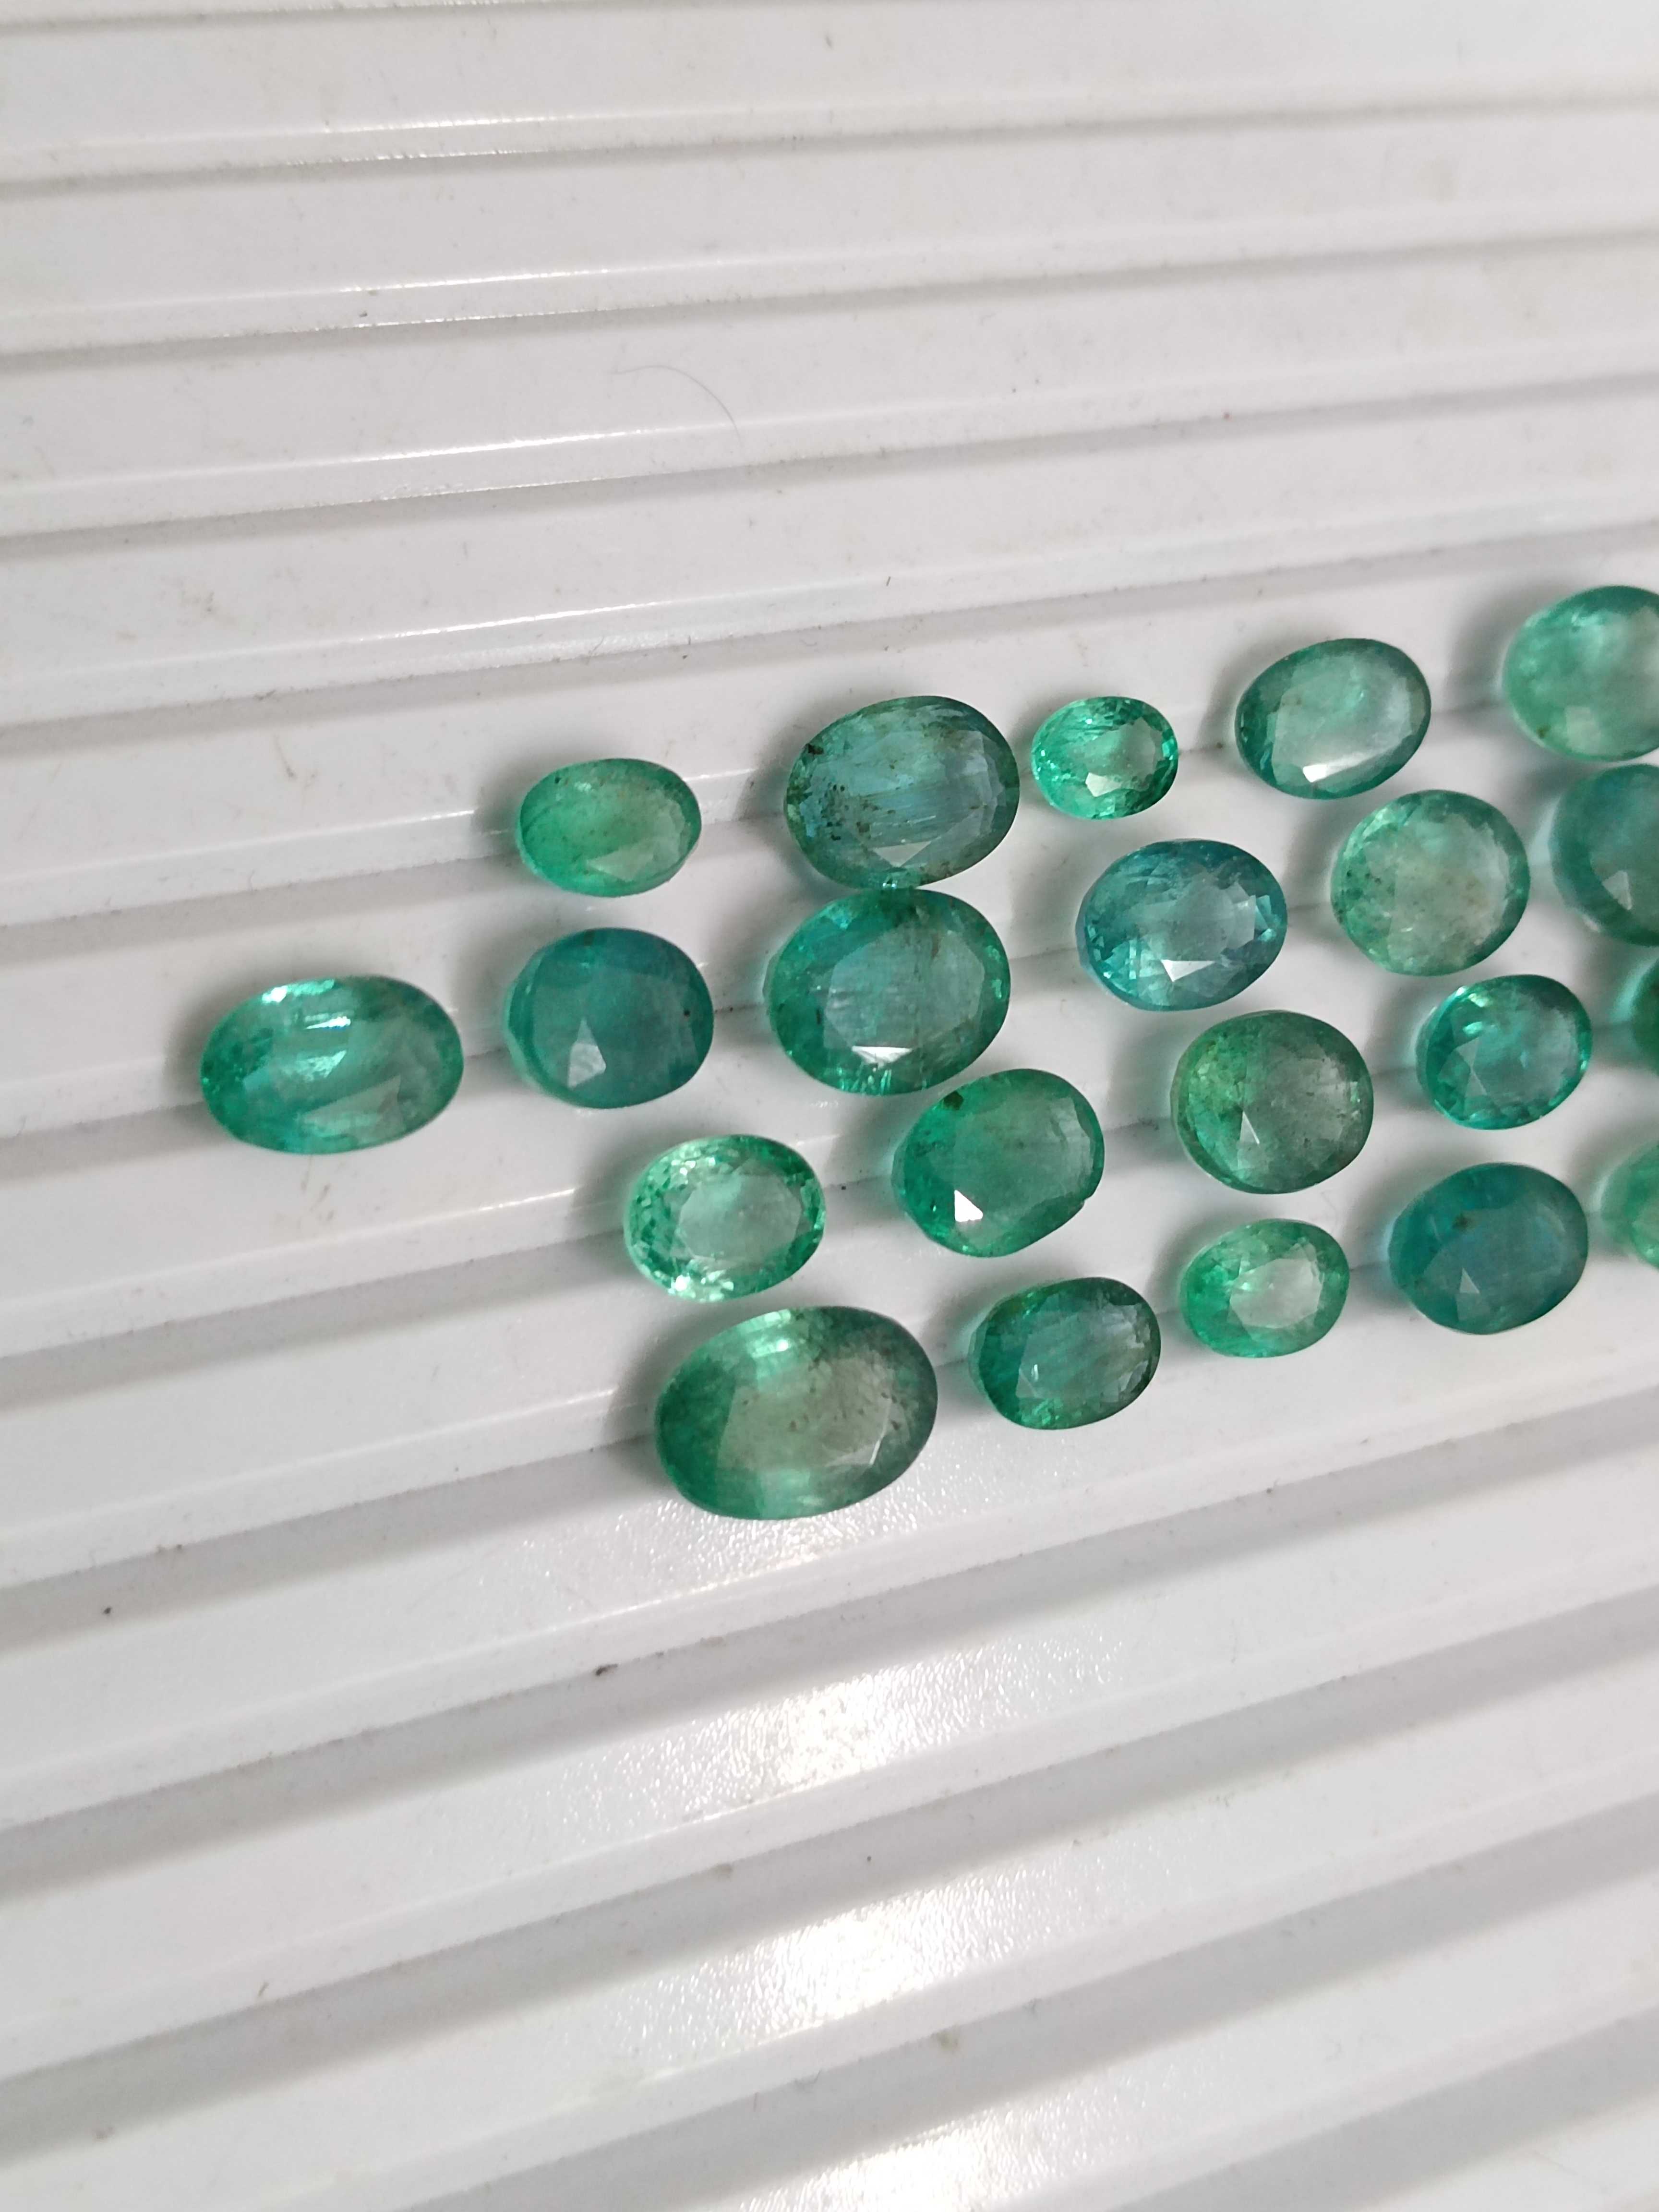 33.76ct oval shaped medium deep green emeralds 